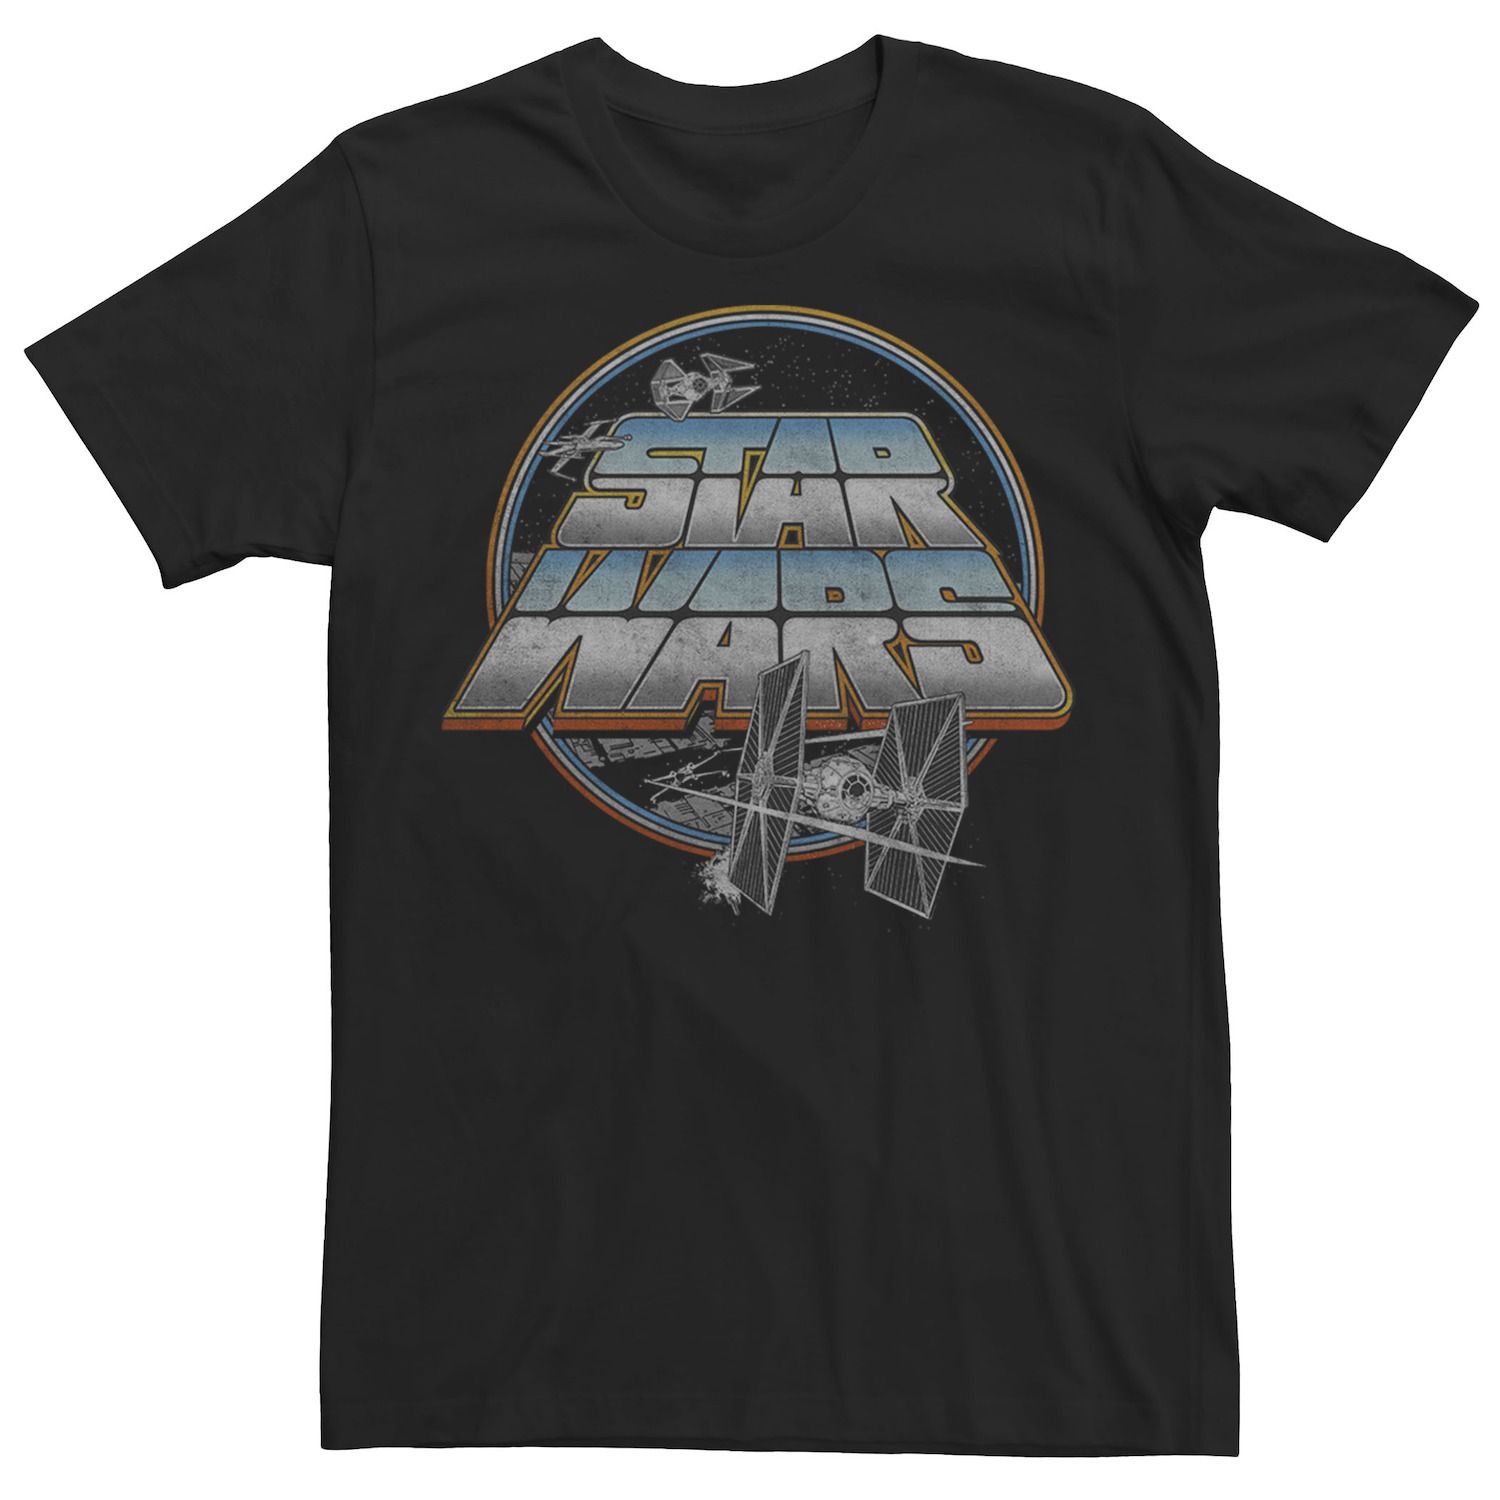 Мужская футболка с рисунком Tie Fighter Vs X-Wing Fighter Star Wars, черный